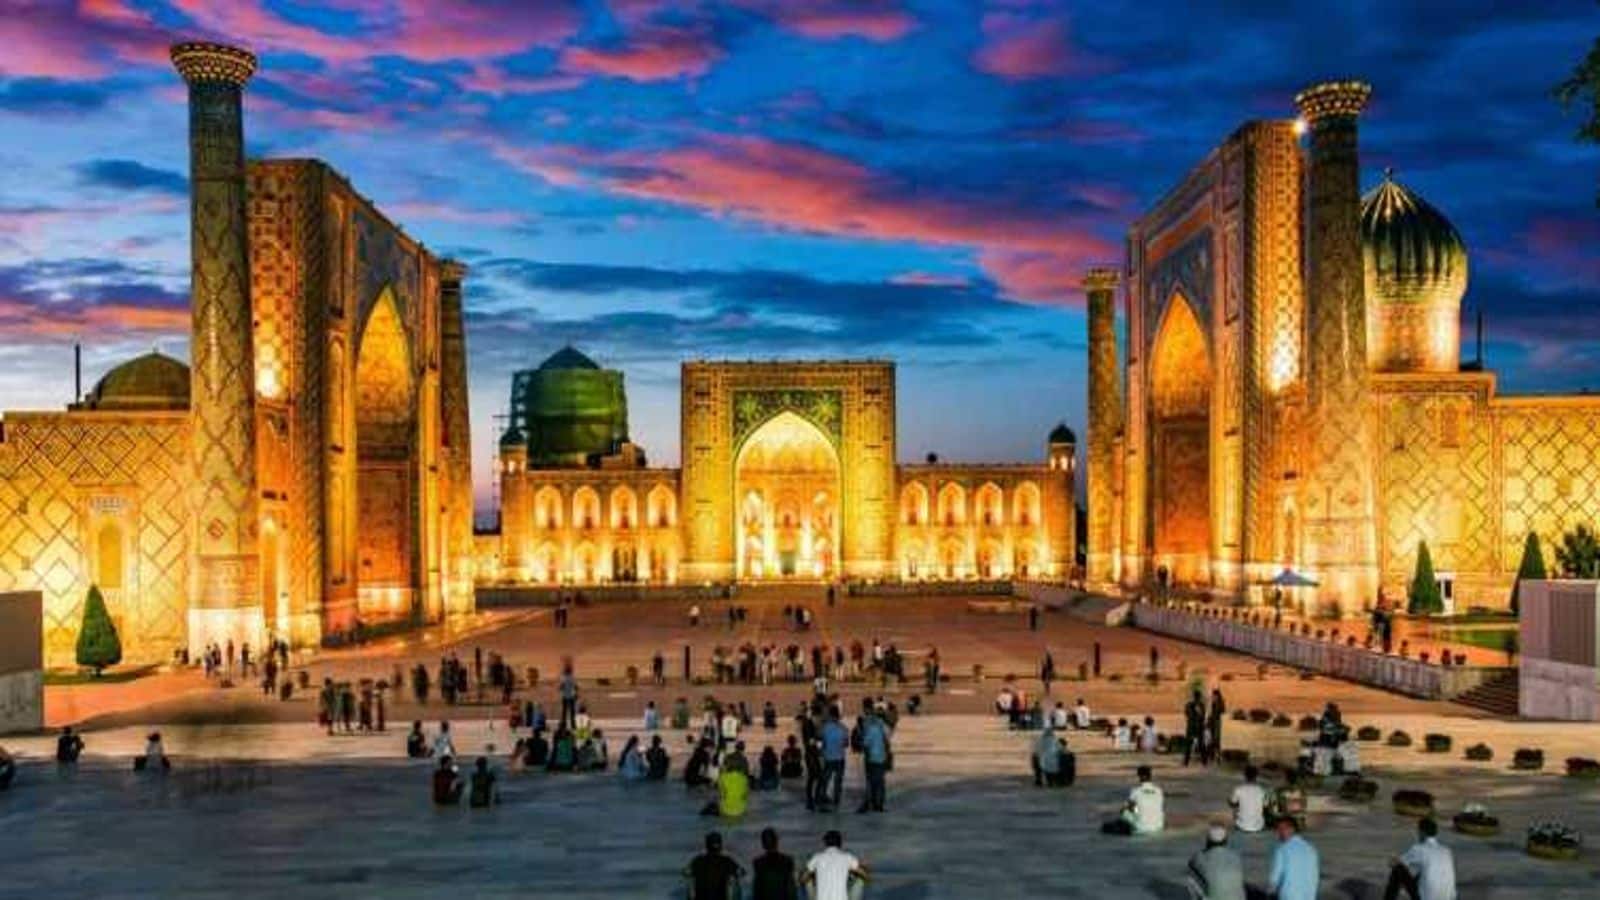 Take a journey through time in Samarkand, Uzbekistan